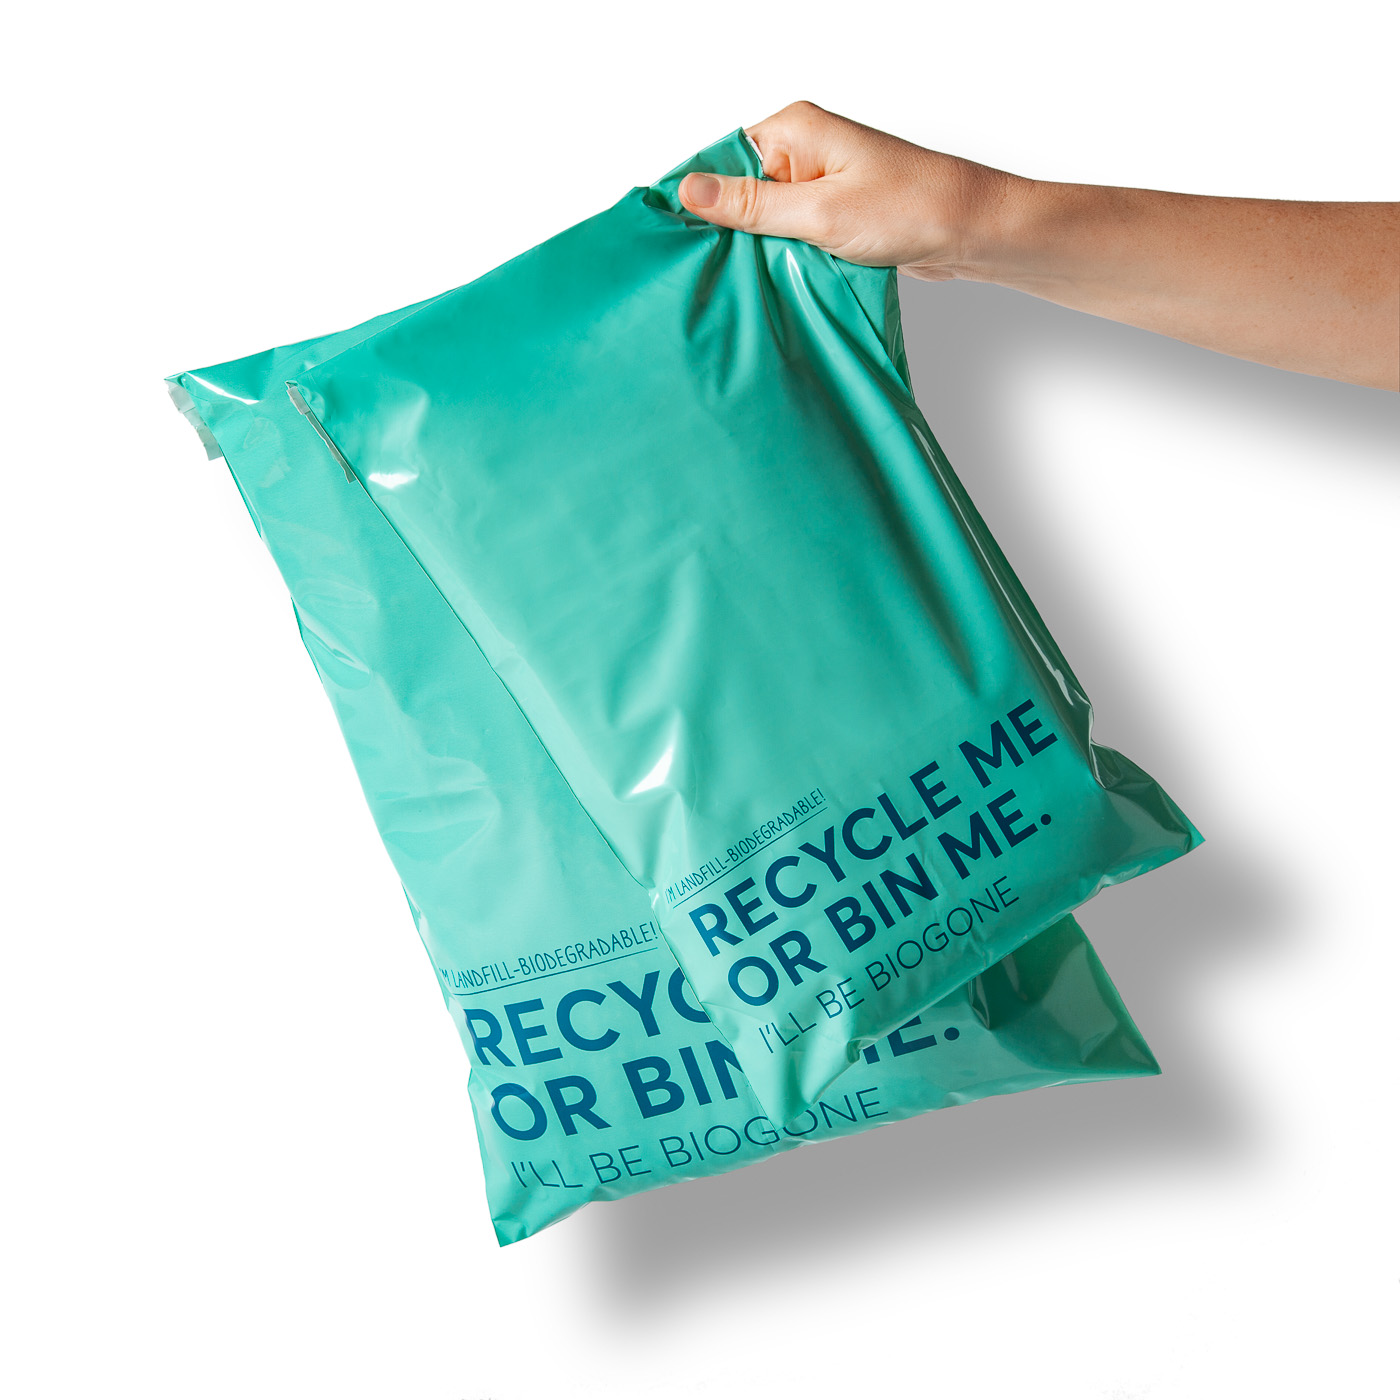 Paquete de 10 un de bolsas compostables y biodegradables